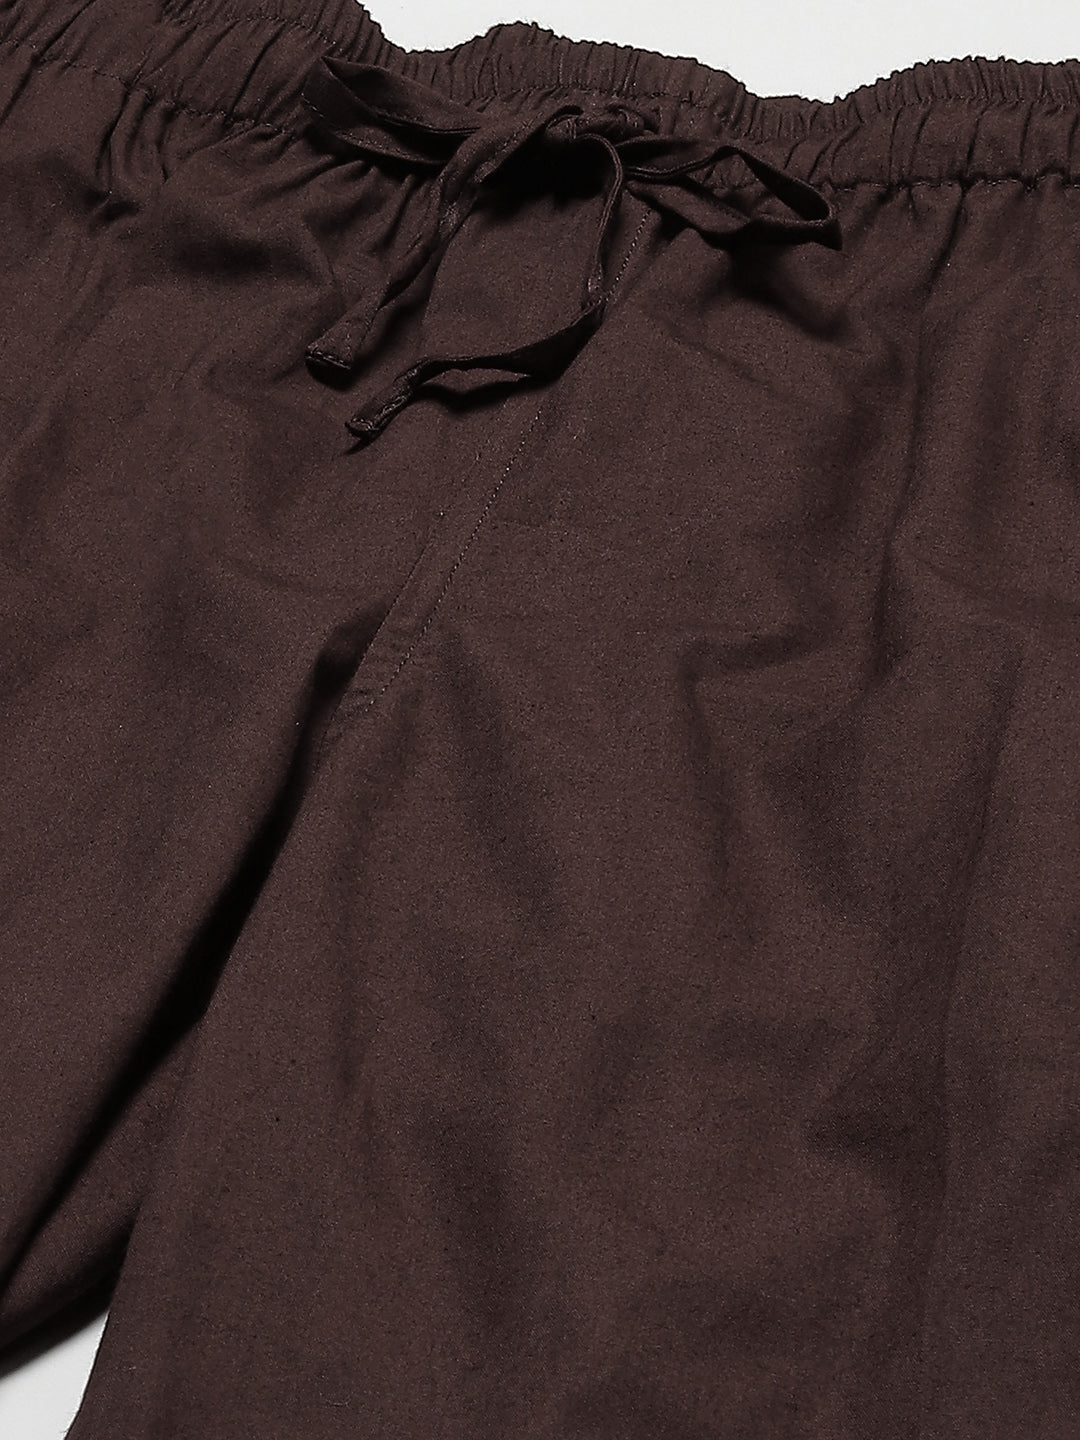 Combo Pack of 2: Deep Brown & Brown Solid Cotton Pyjamas